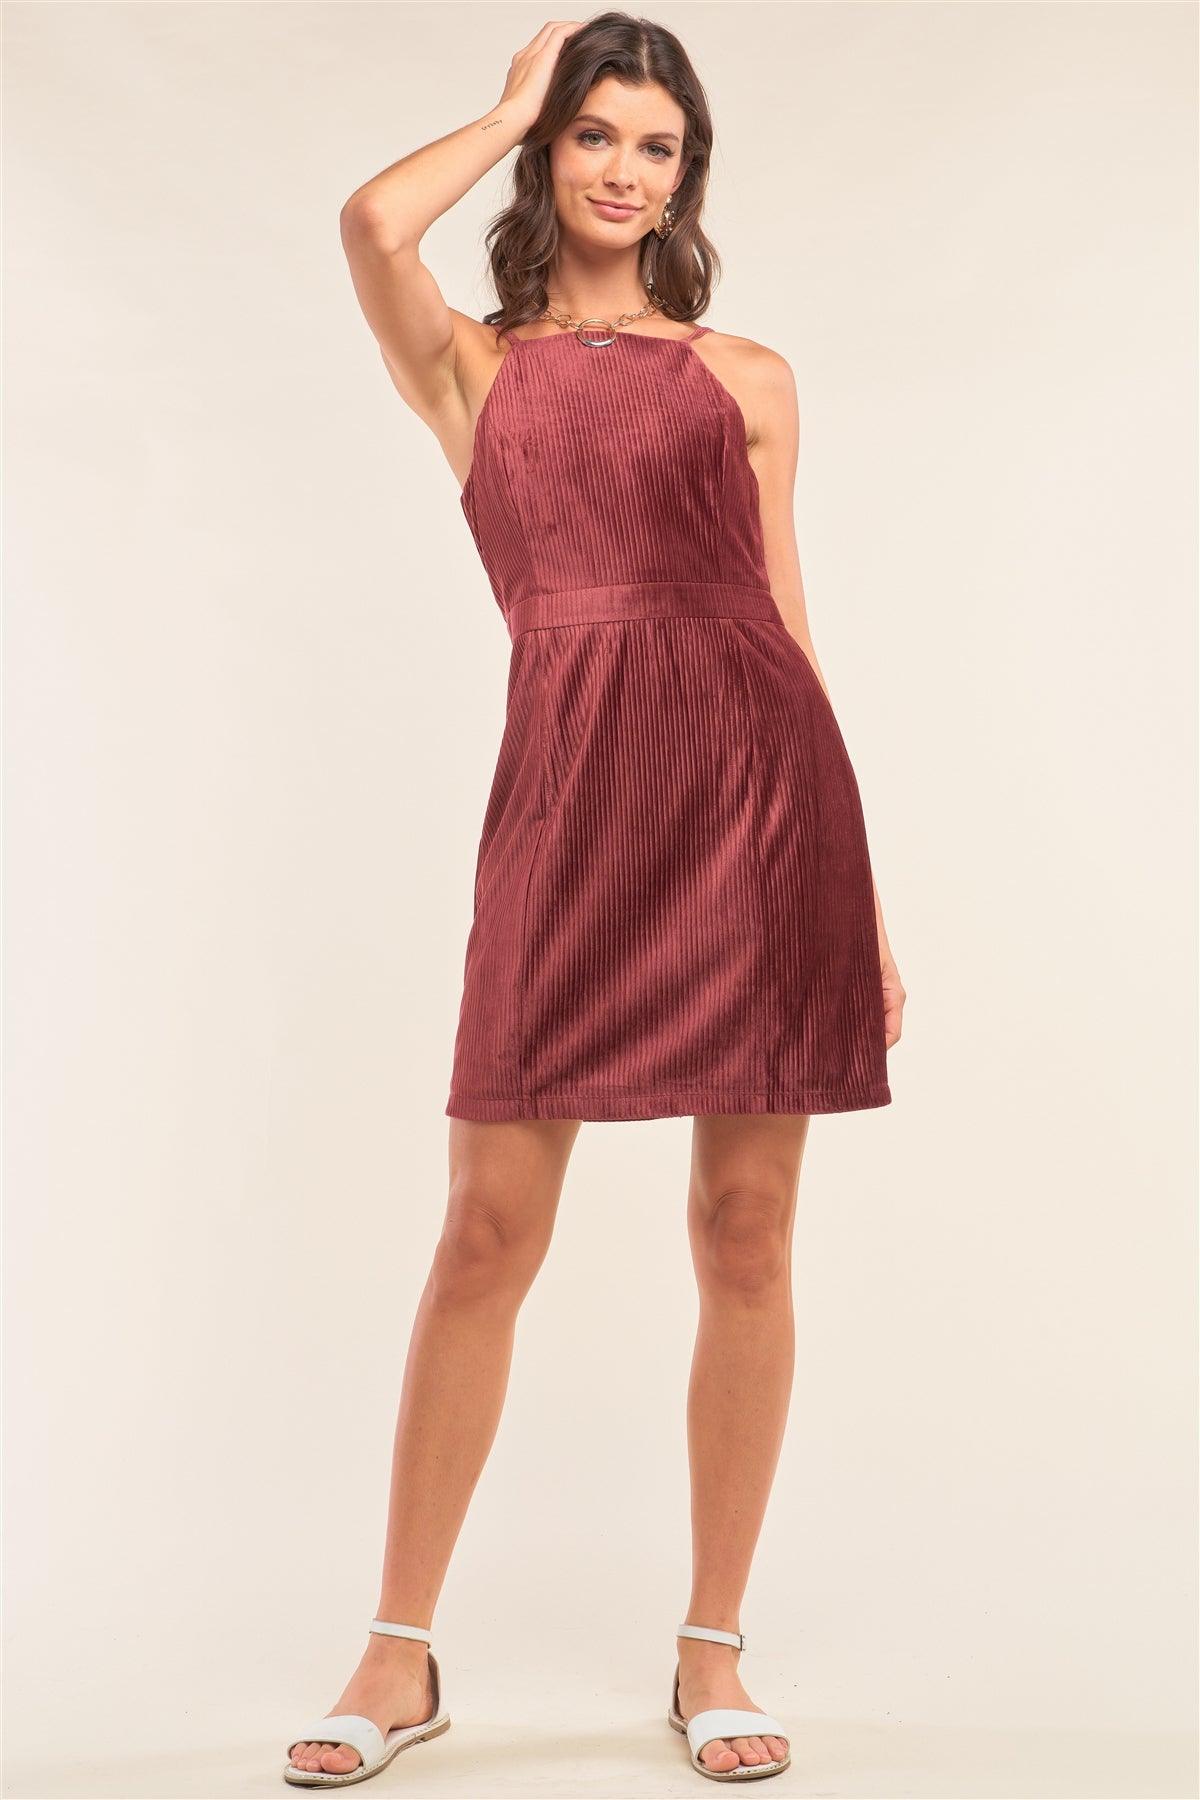 Cranberry Red Corduroy Velvet Sleeveless Square Neck Tight Fit Mini Dress /1-1-2-1